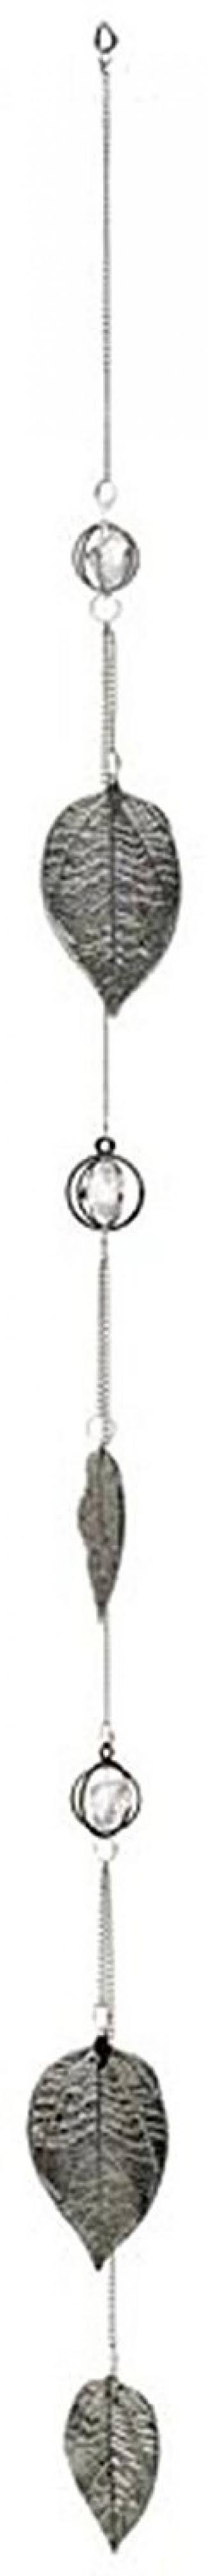 Silver Metal Hanging Leaf Garland Ornament - 110cm L